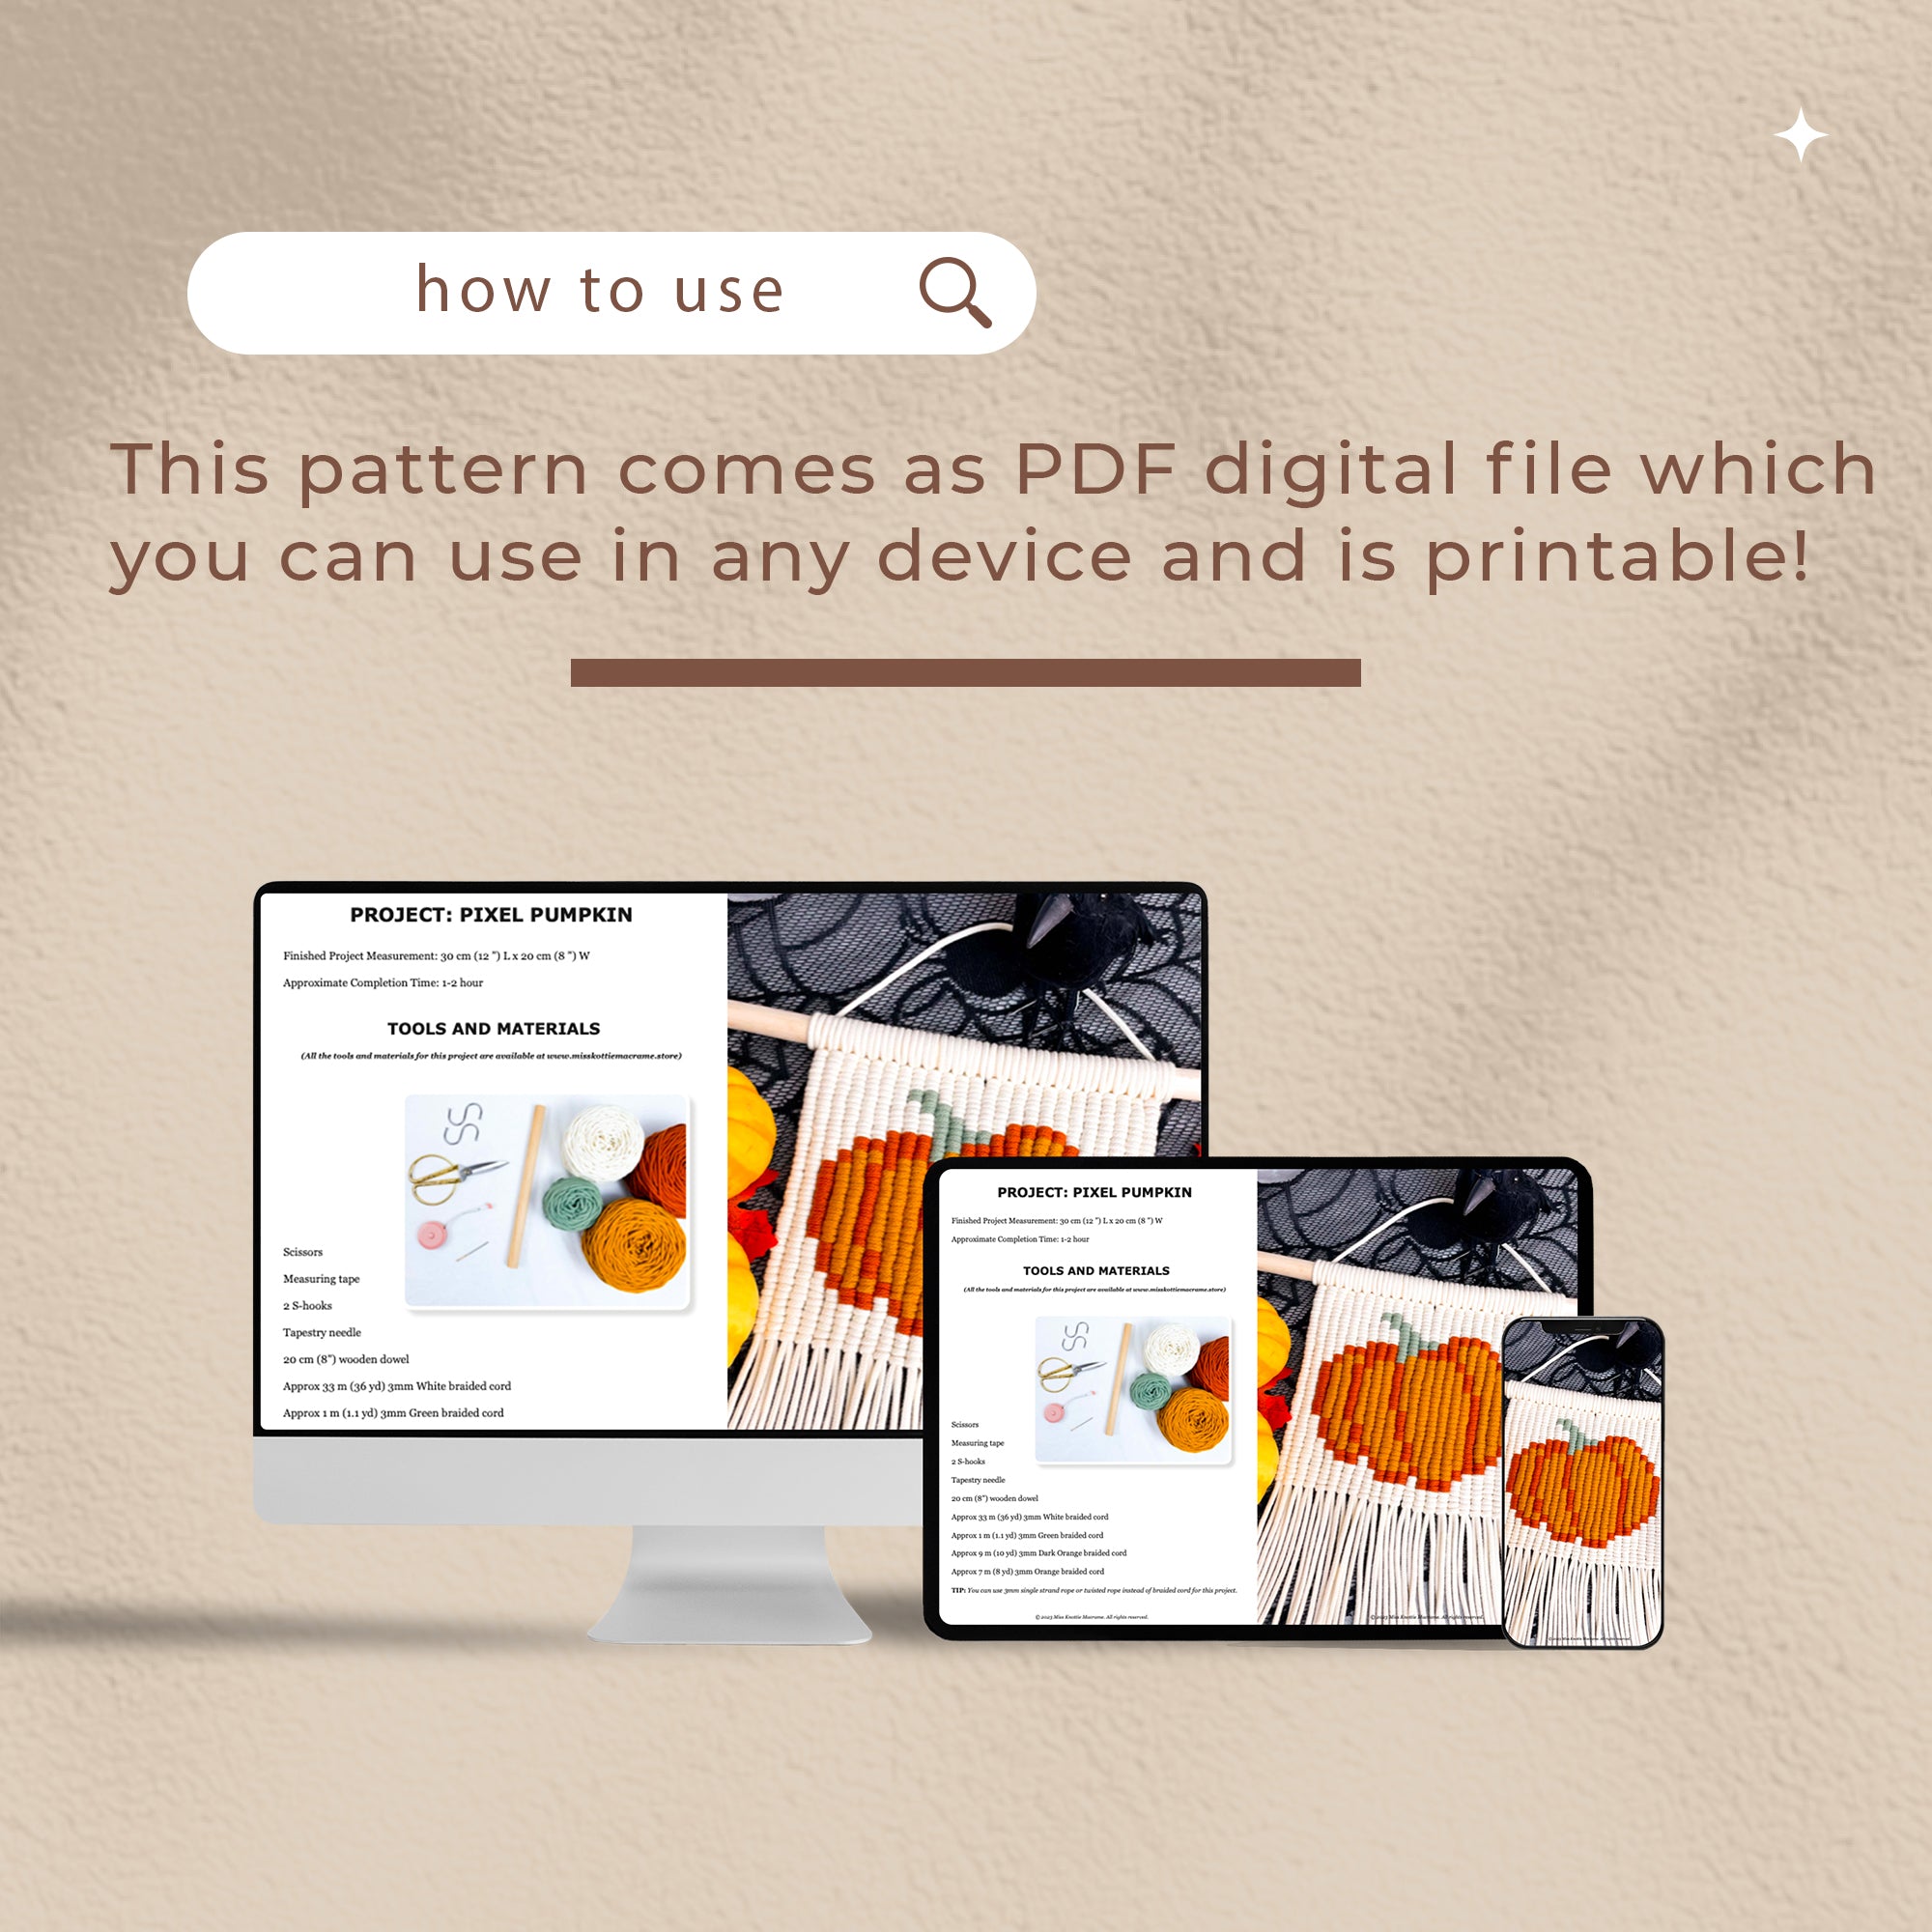 Pattern Pumpkin Pixel-Guida digitale PDF e Knot